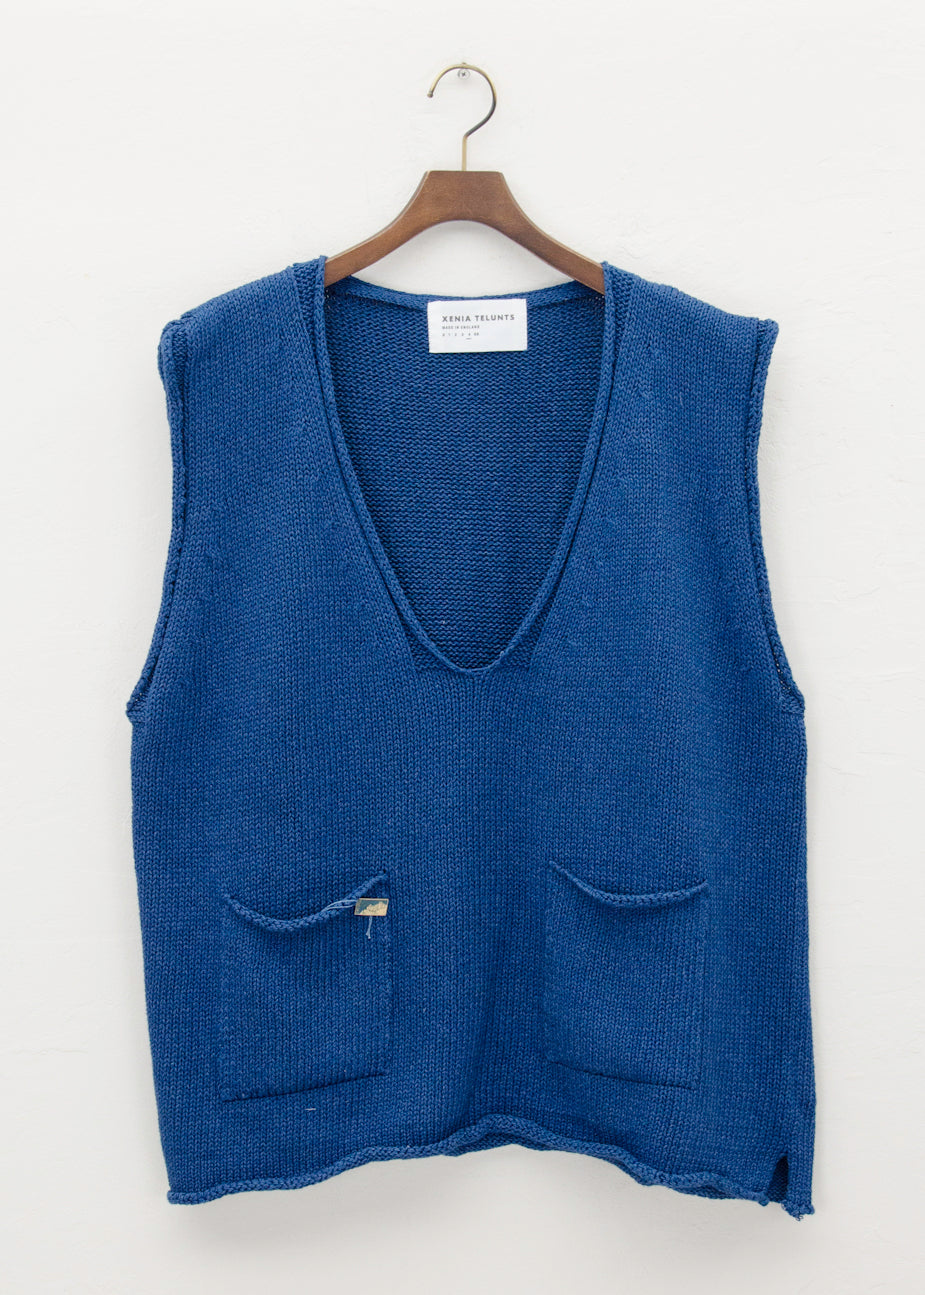 XENIA TELUNTS "Indigo Blue Drop Neck Pocket Vest"